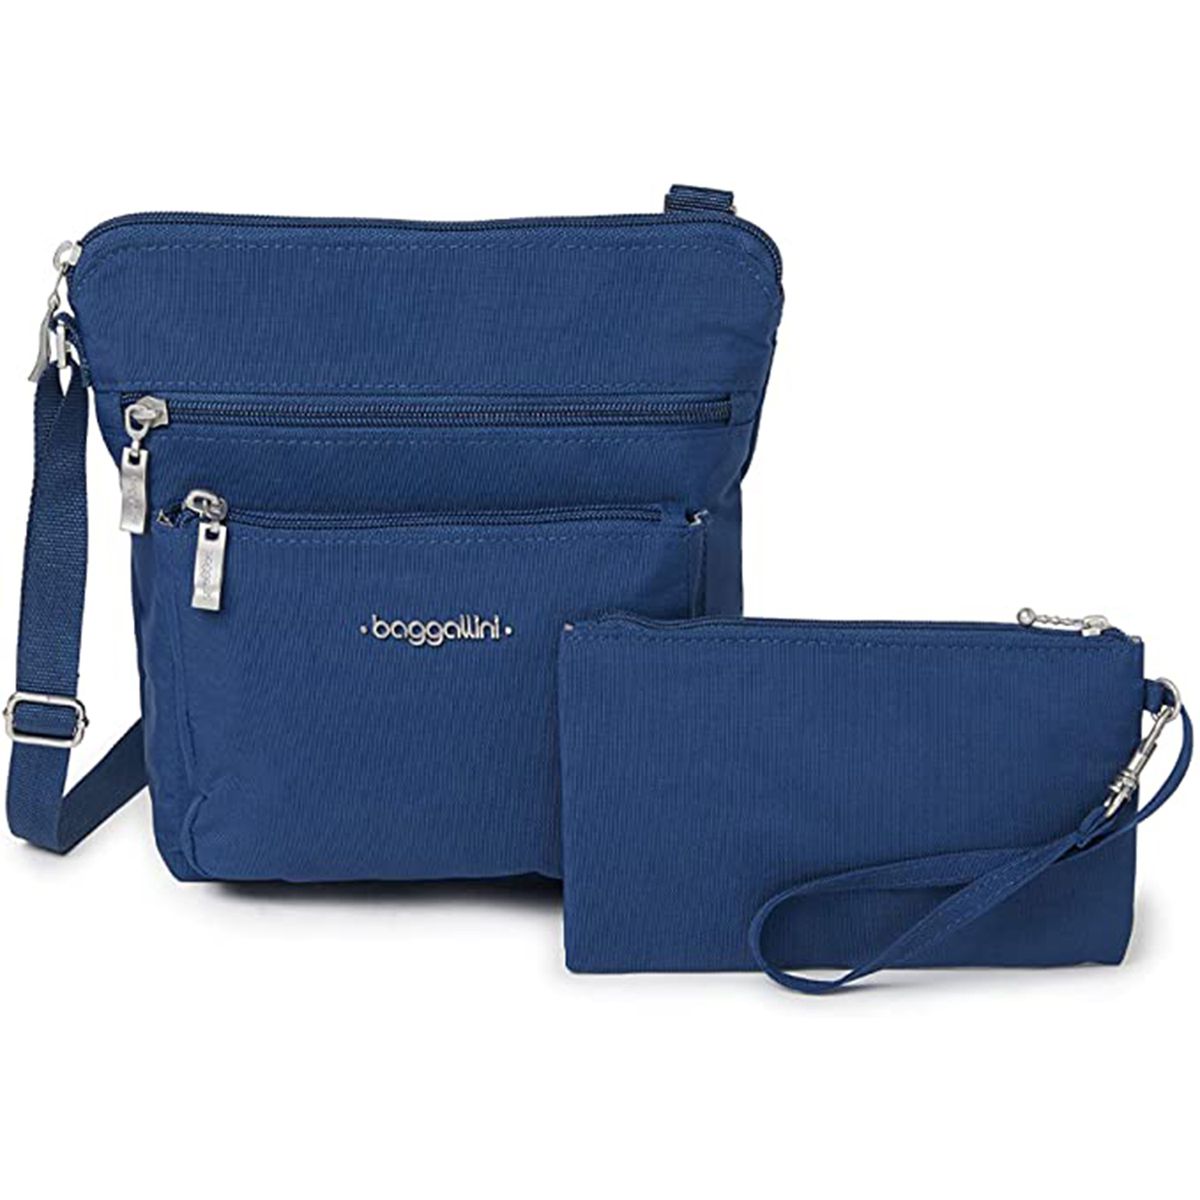 Baggallini womens Pocket With Rfid Crossbody Bags